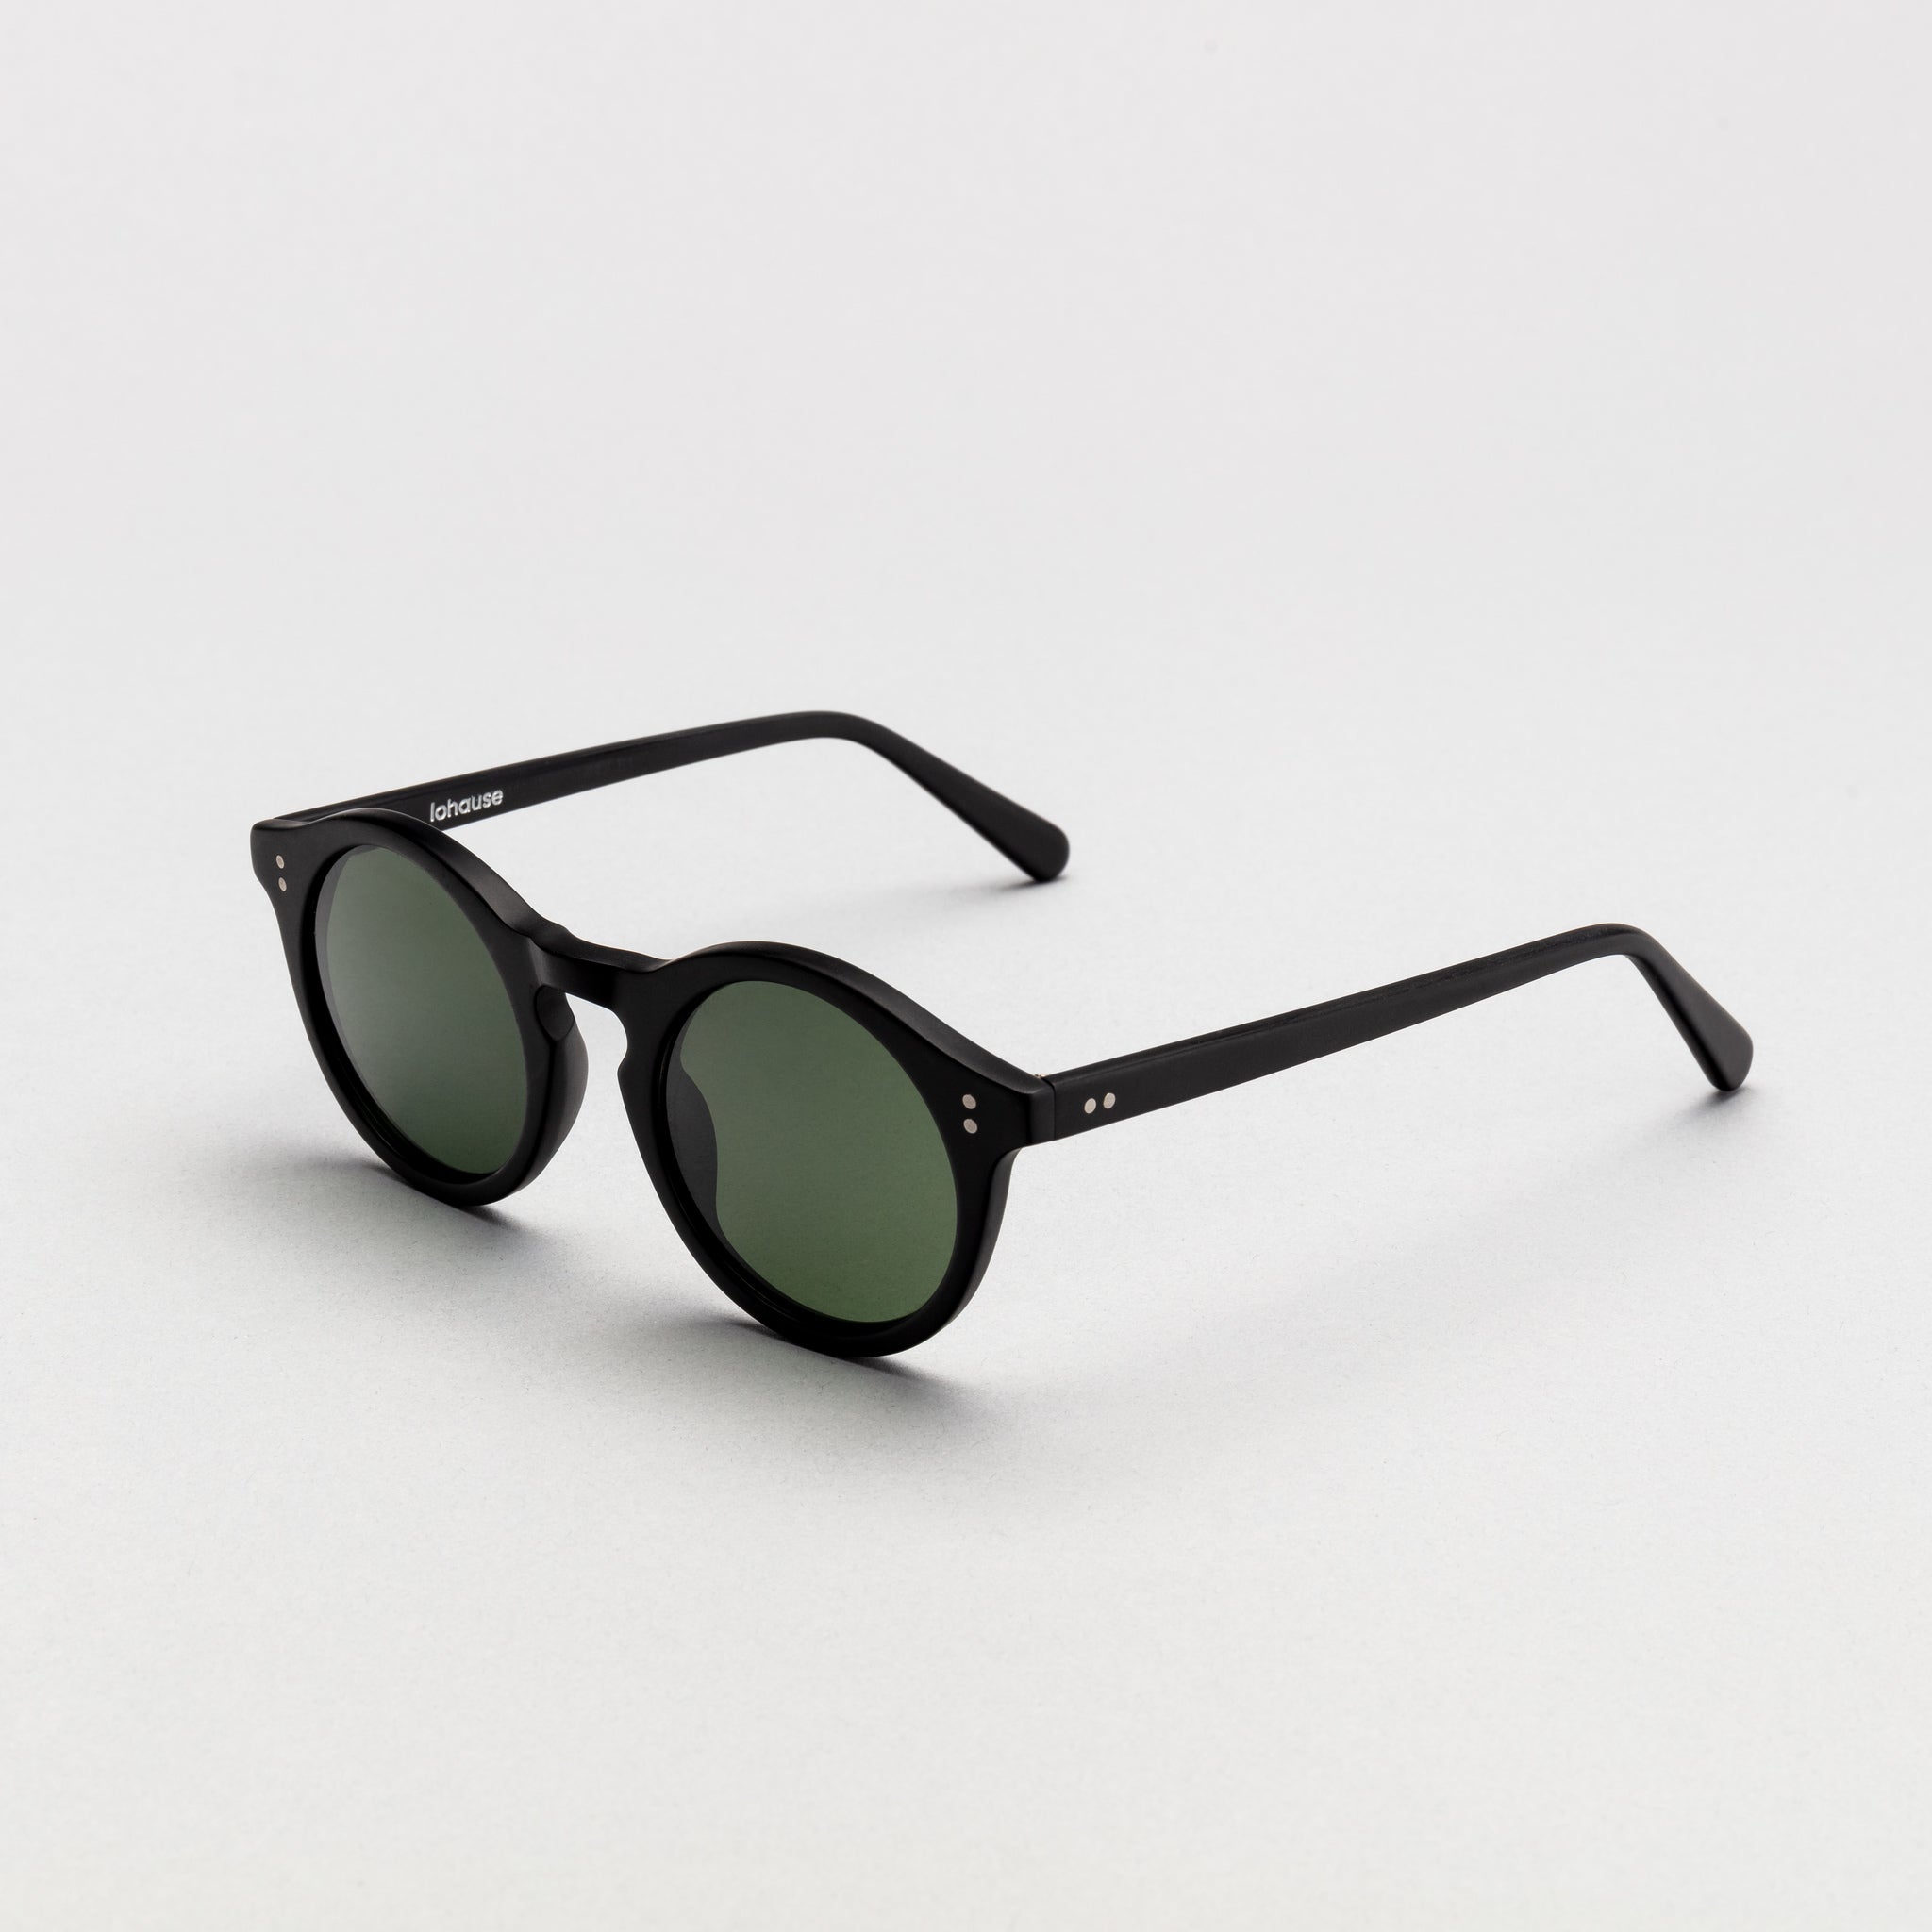 Round Vintage Sunglasses With Black Lenses & Black Frames